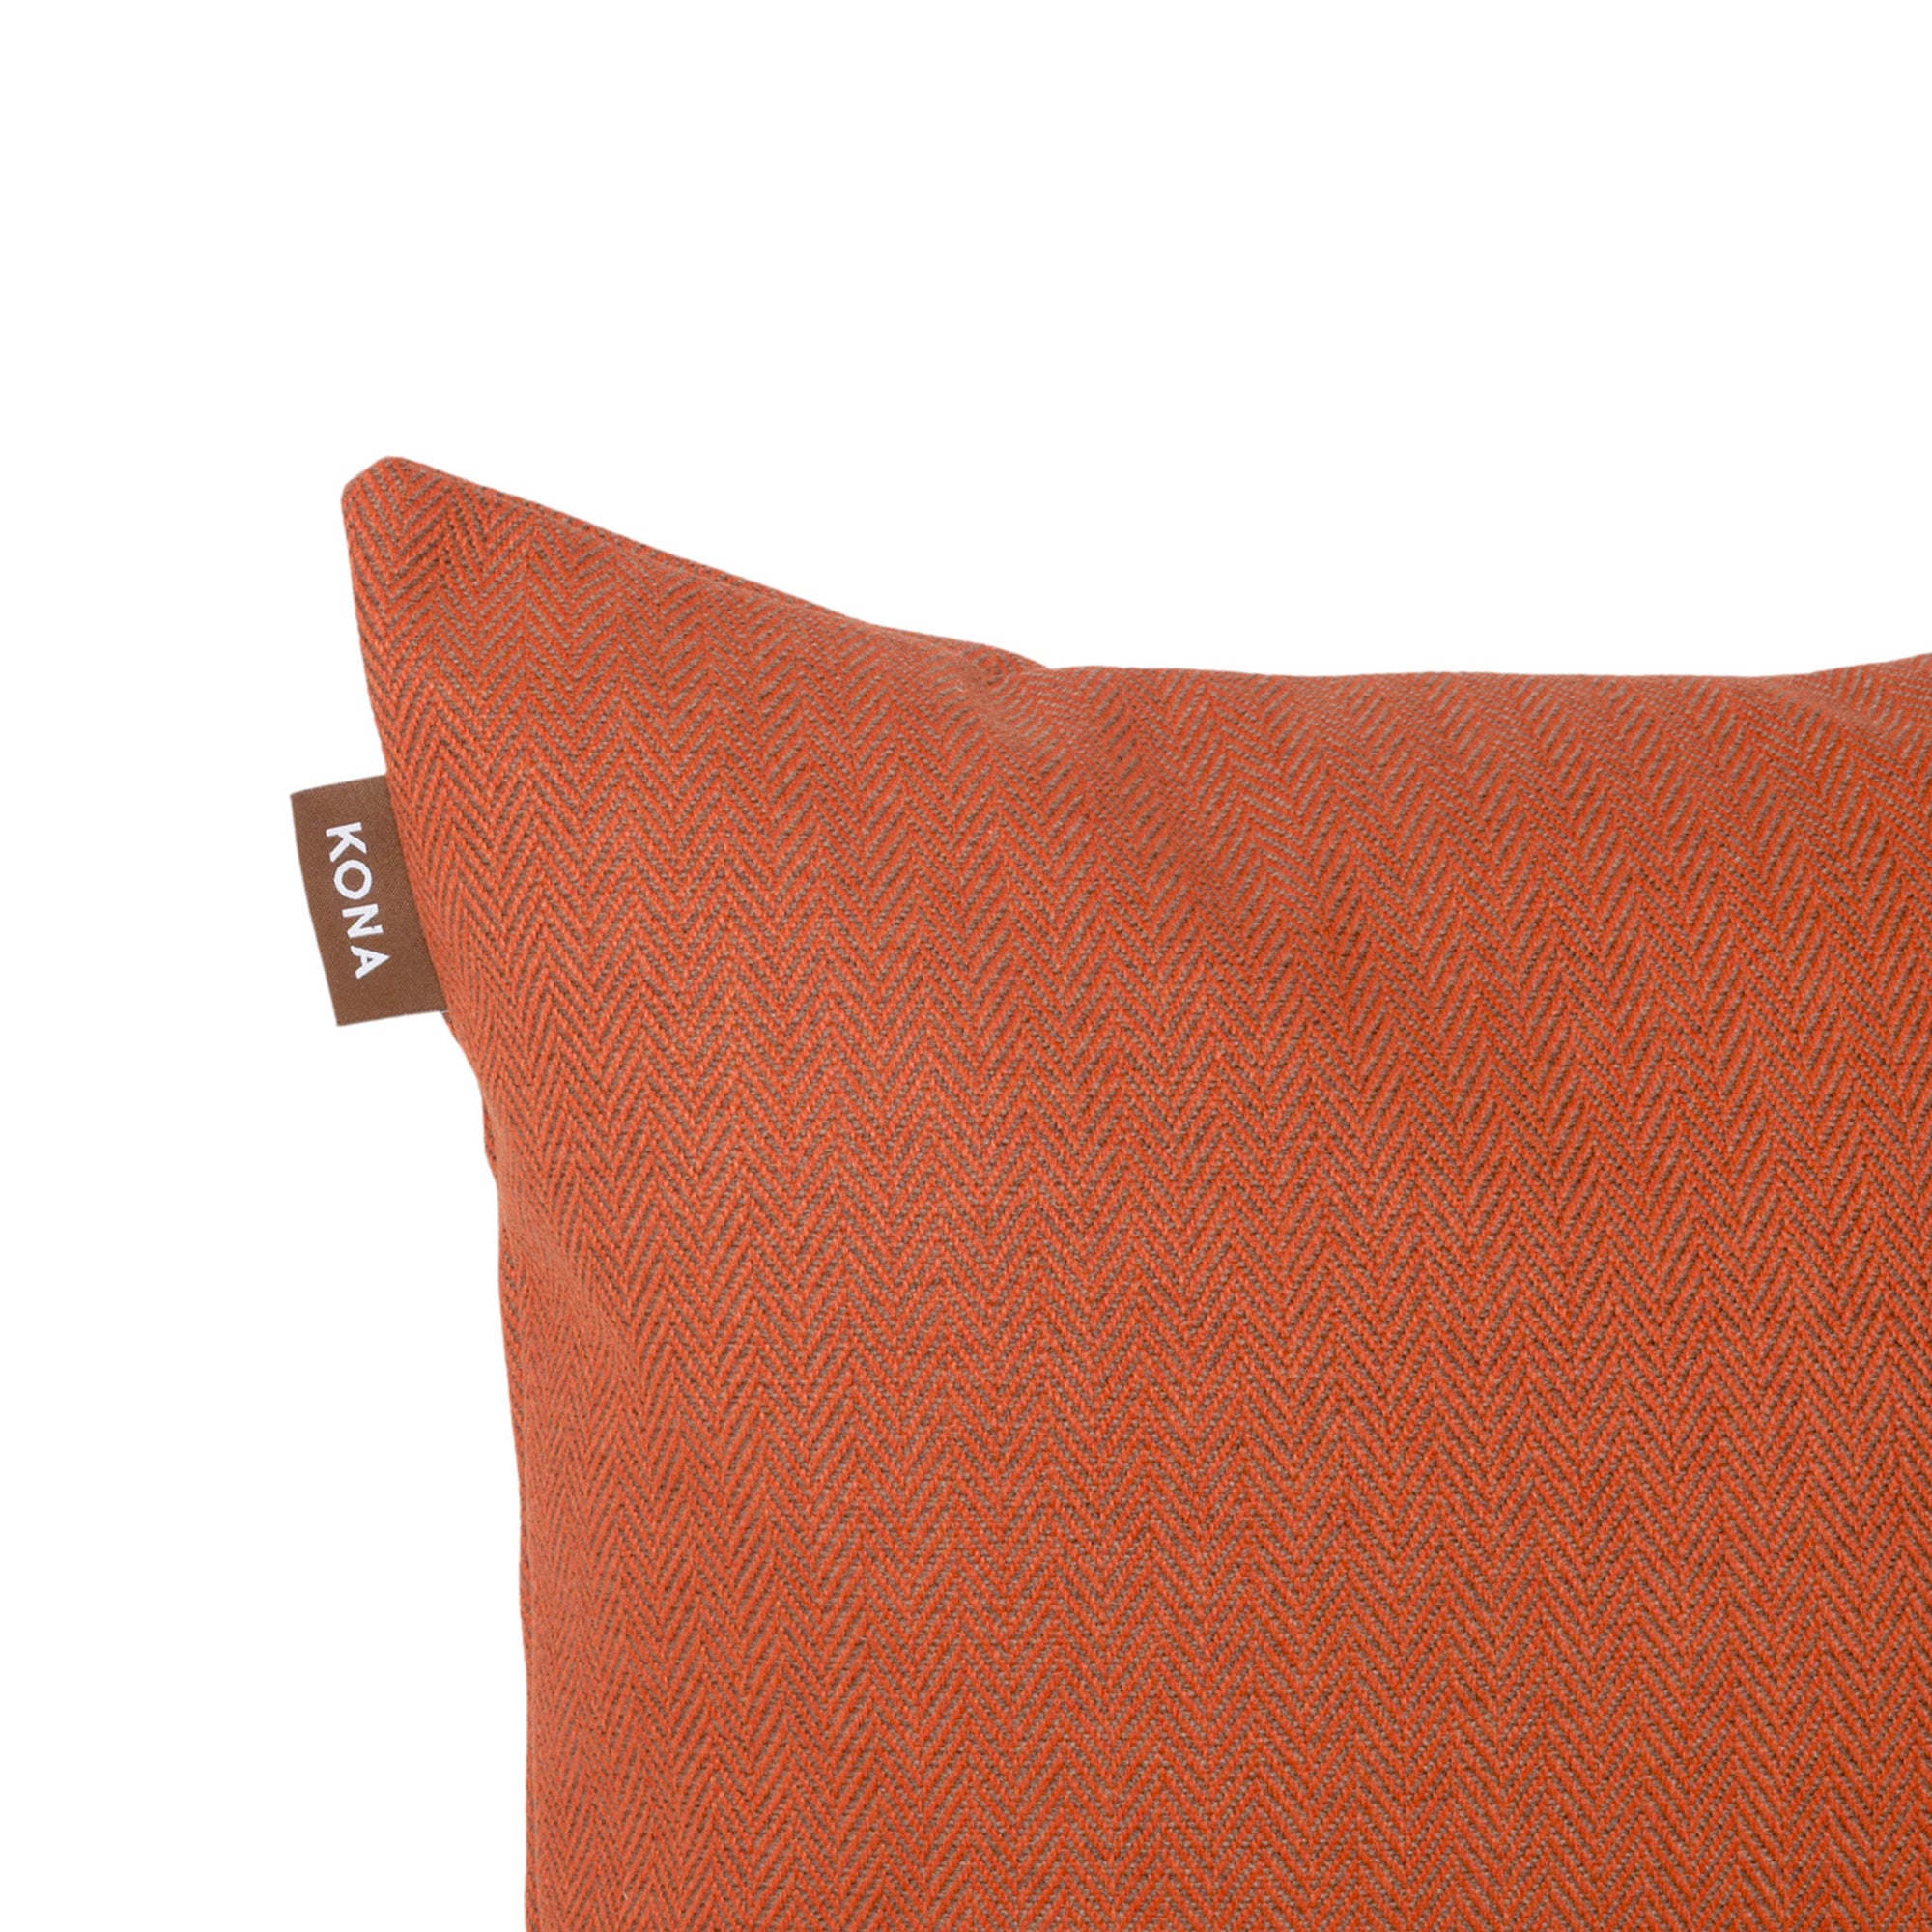 KONA CAVE® Decorative pillow covers, sophisticated orange herringbone fabric.